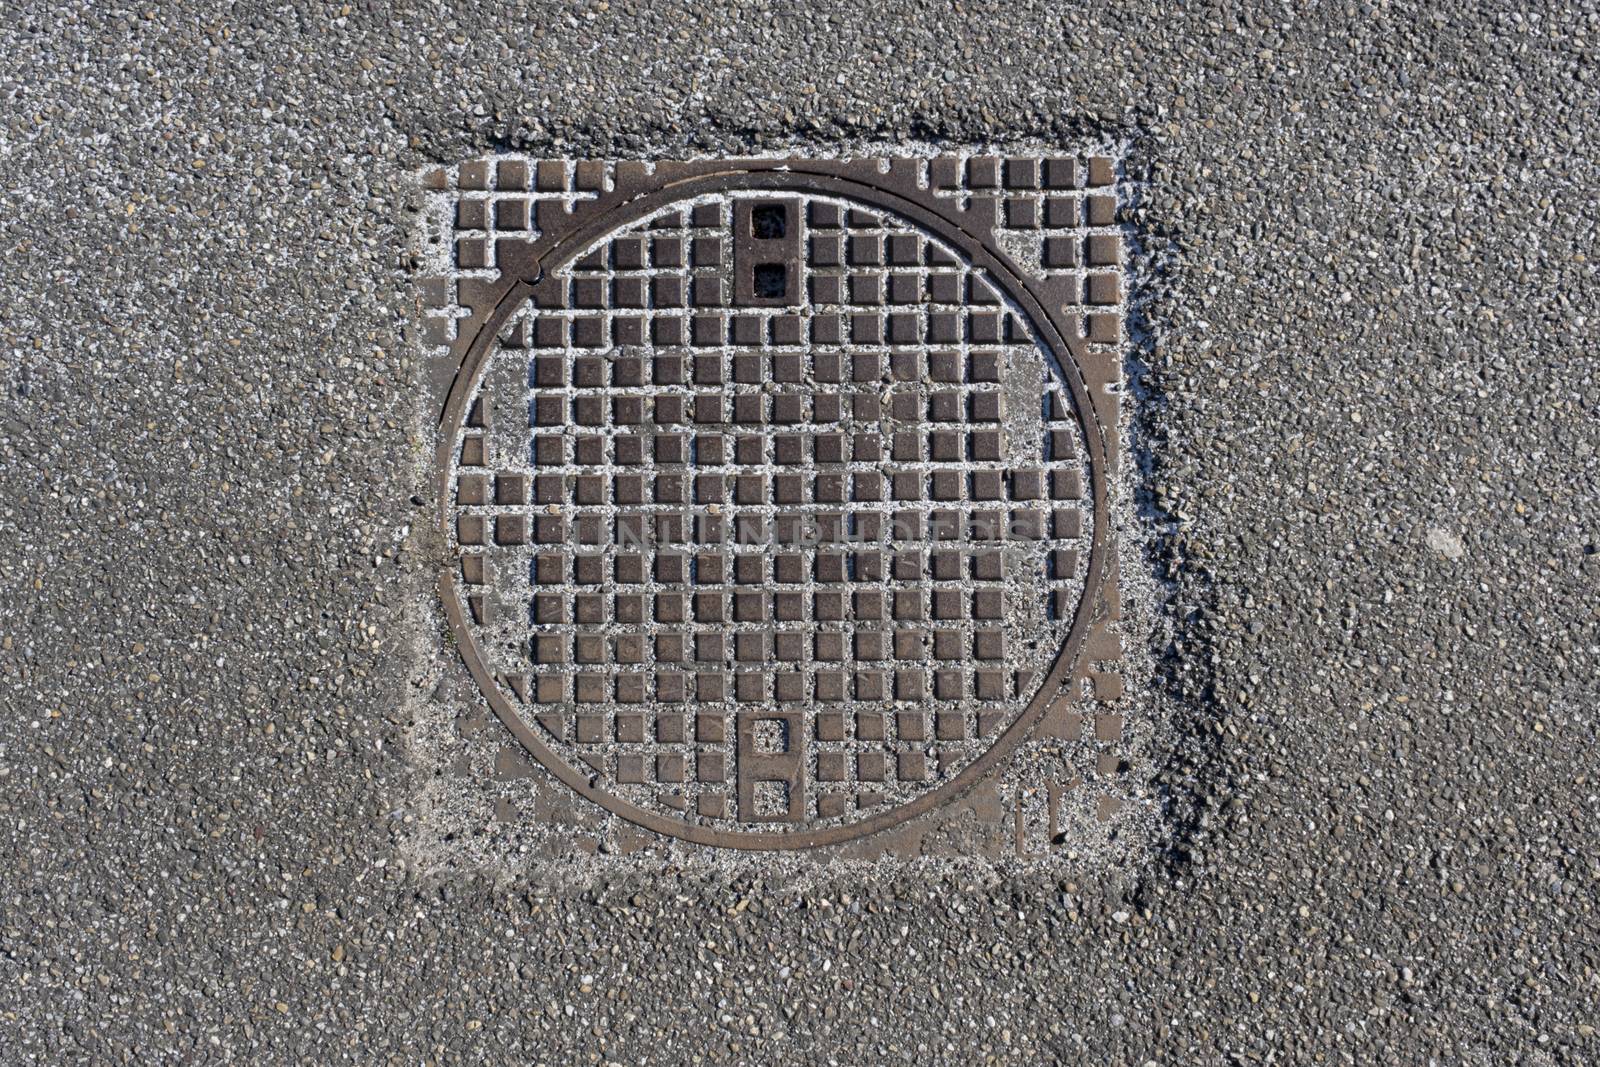 Rusty manhole cap, grunge manhole cover square